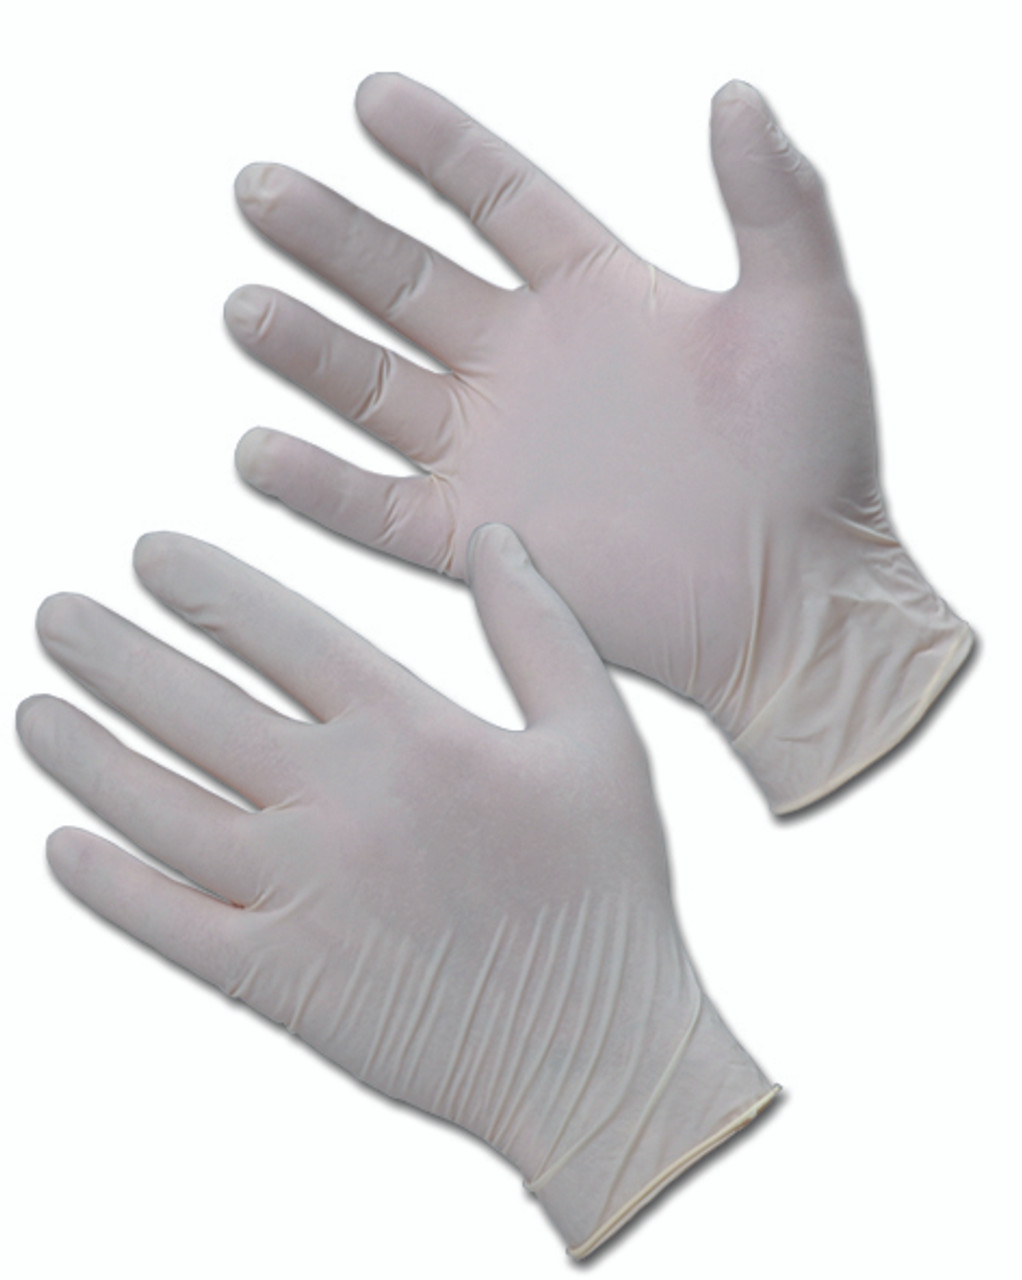 Latex Disposable Gloves Powdered - Medium, 100 Per Box